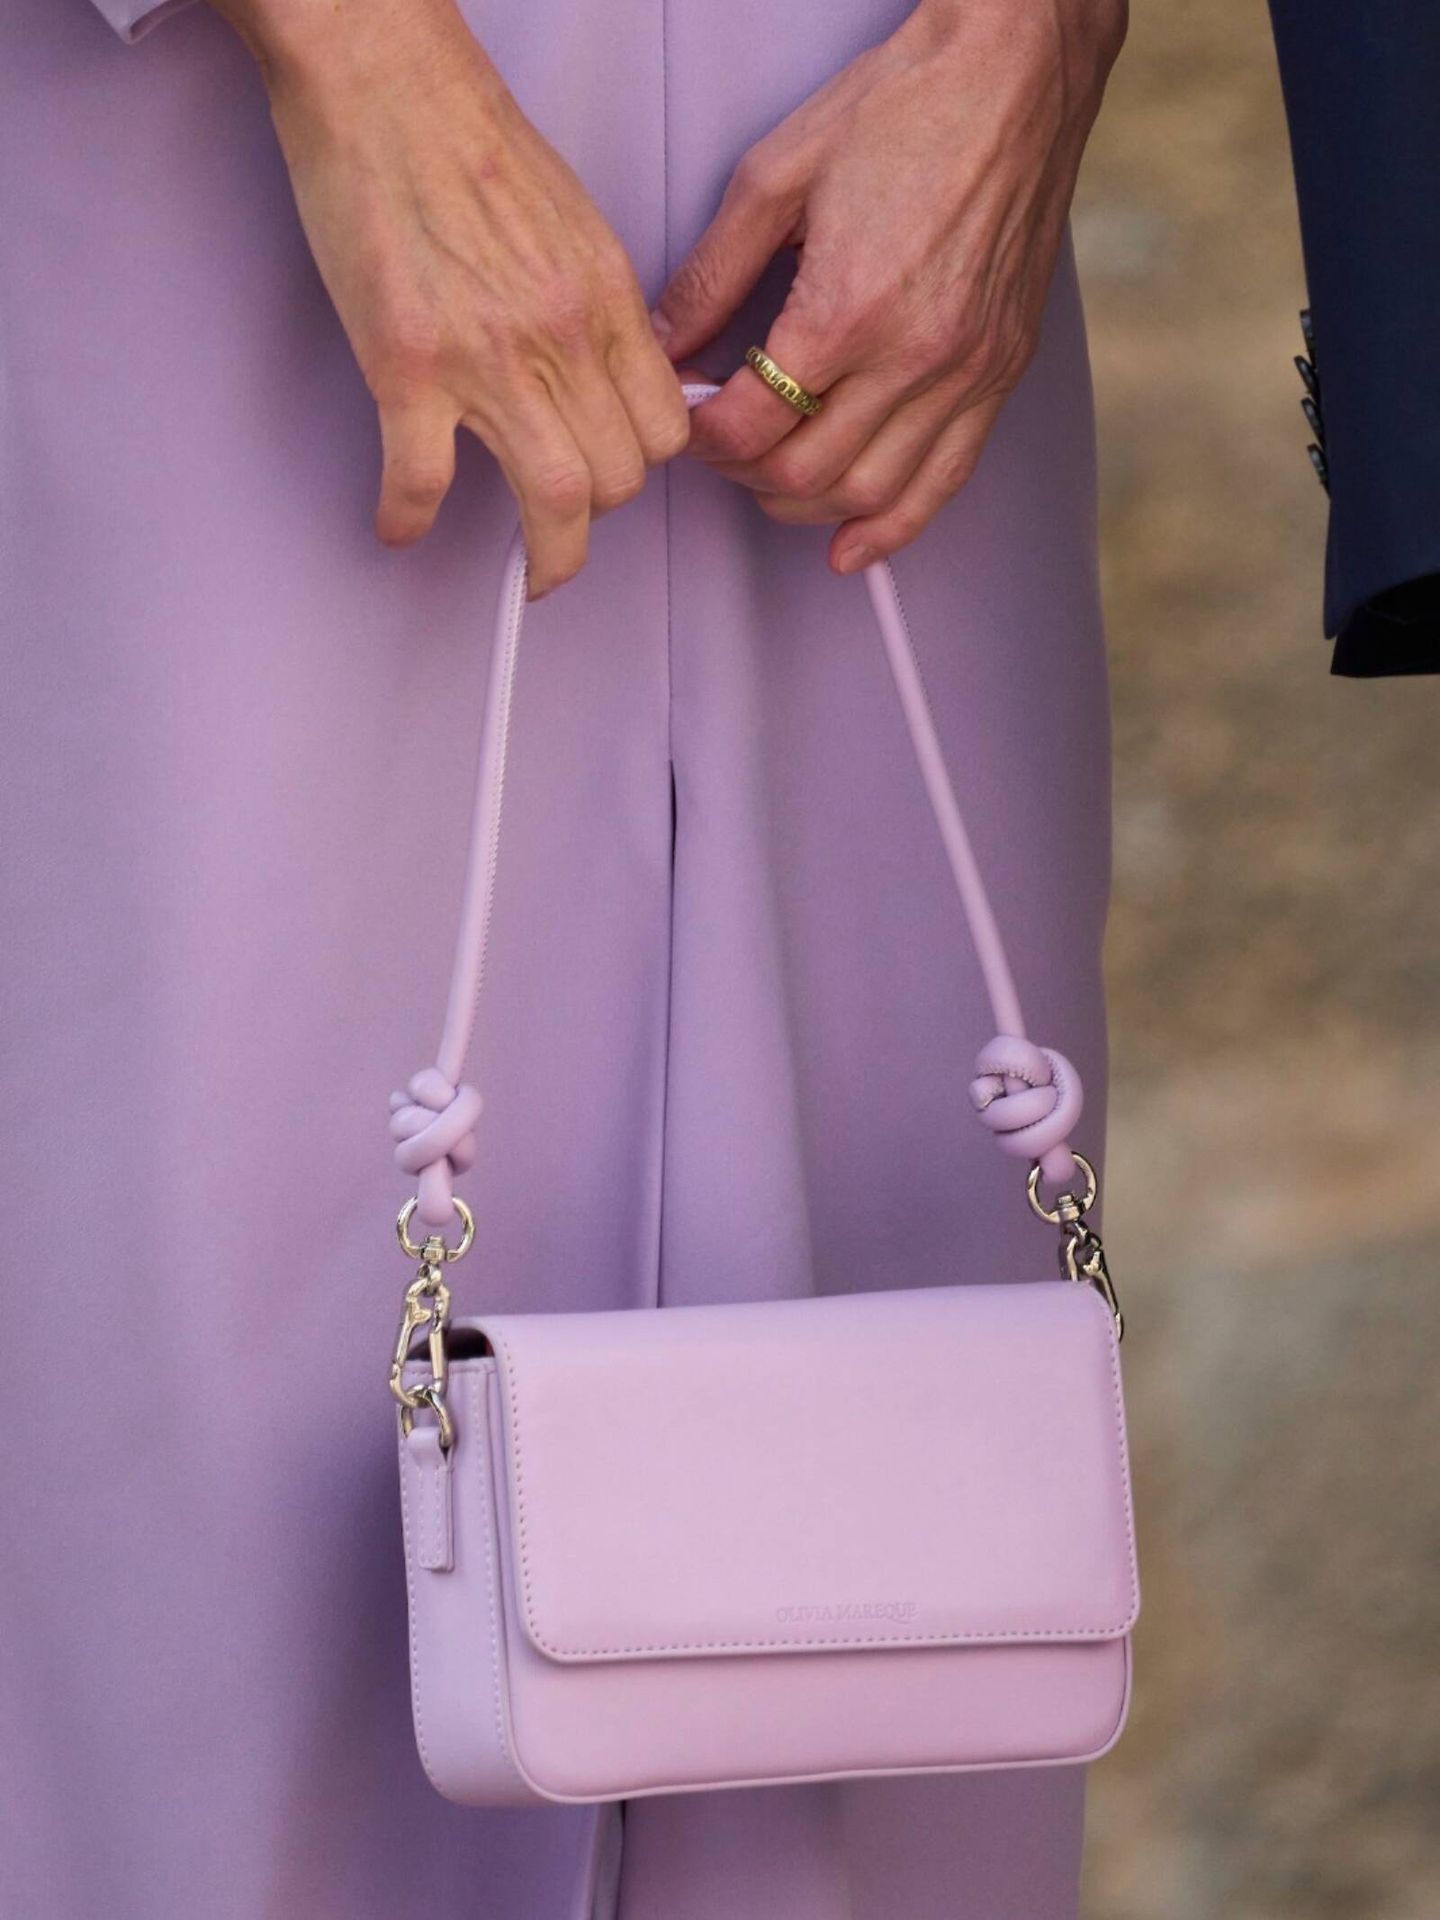 El bolso de la reina Letizia en Cádiz, al detalle. (Limited Pictures)